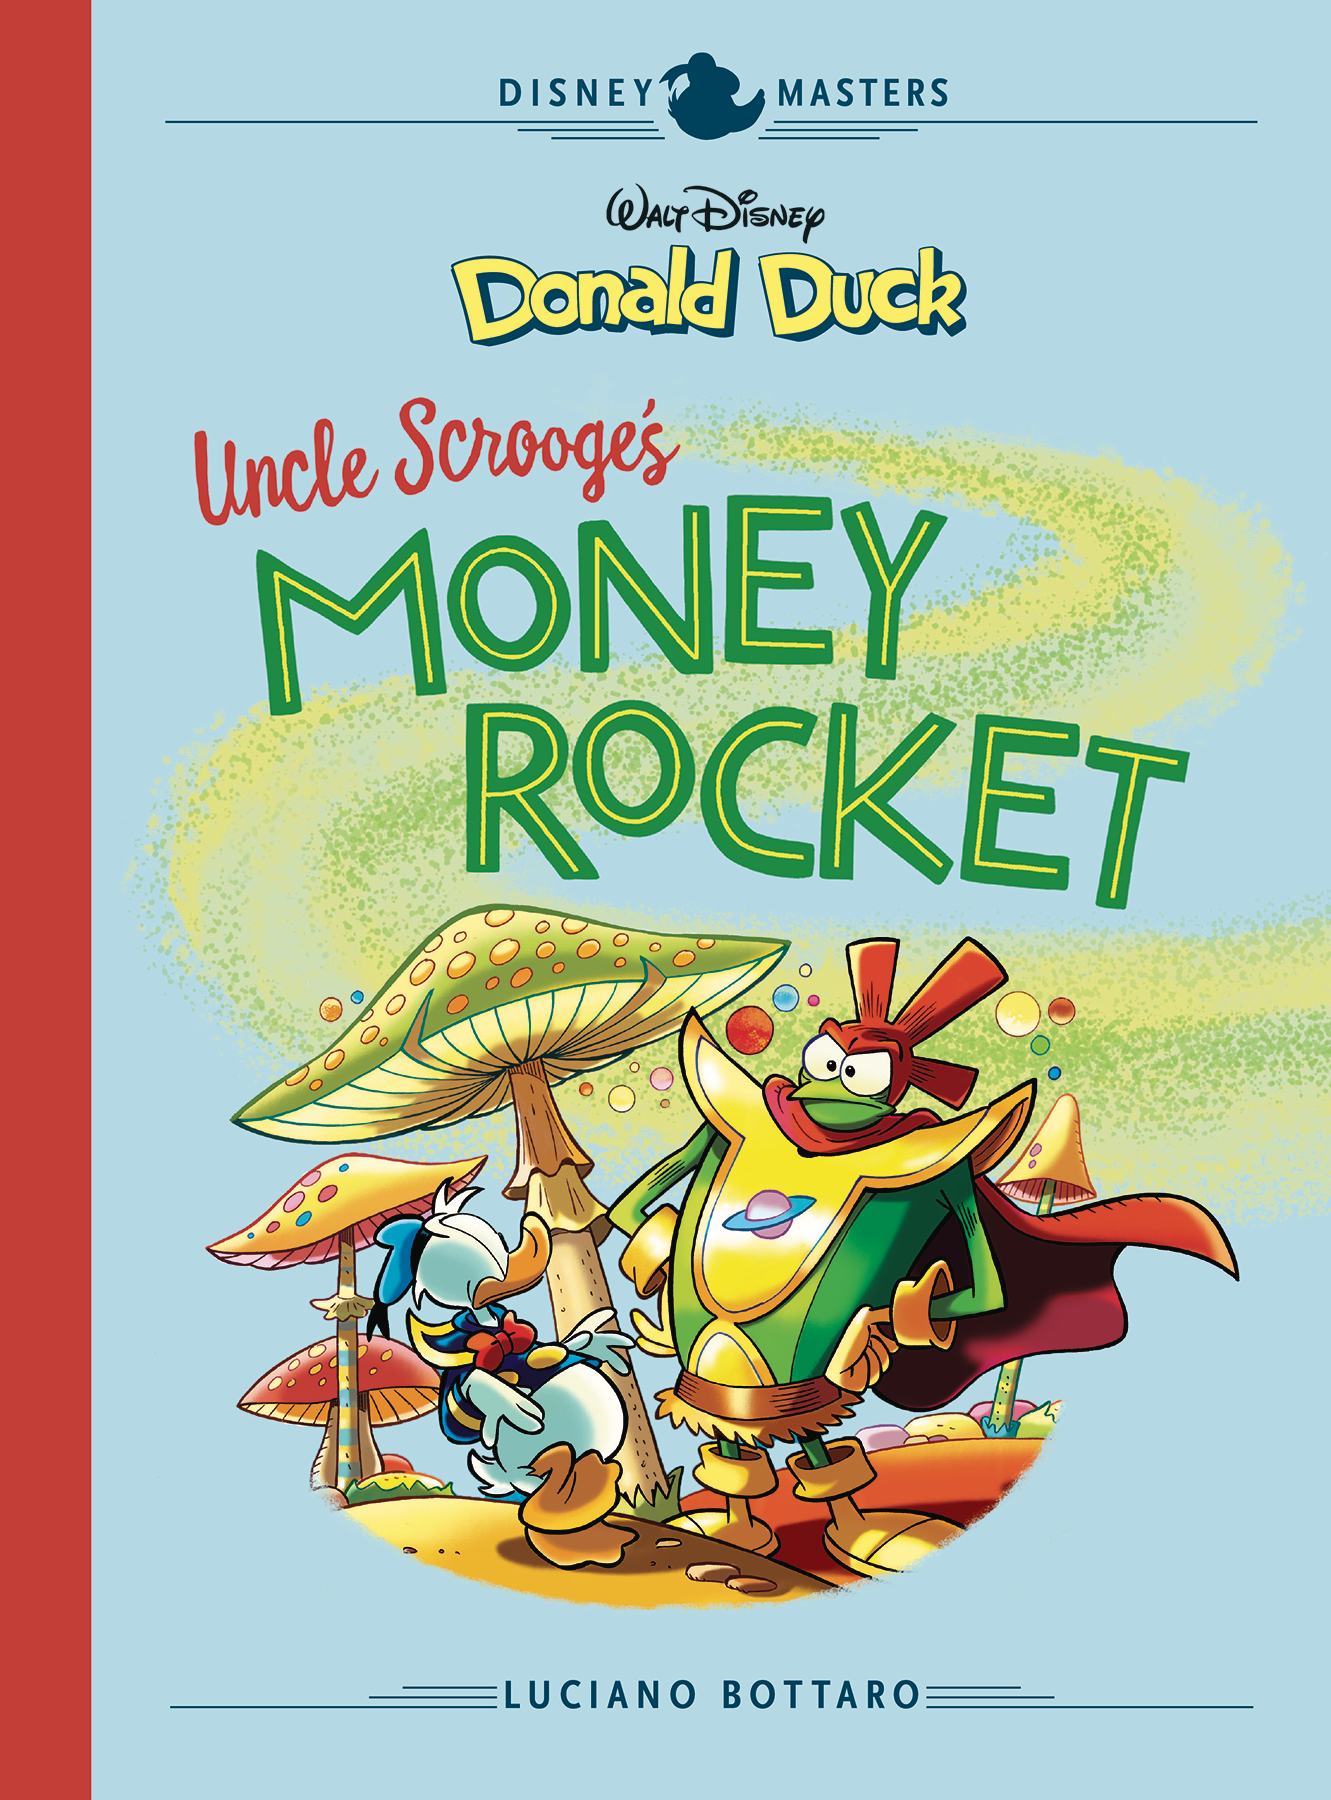 Disney Masters Hardcover Volume 2 Bottaro Donald Duck Money Rocket